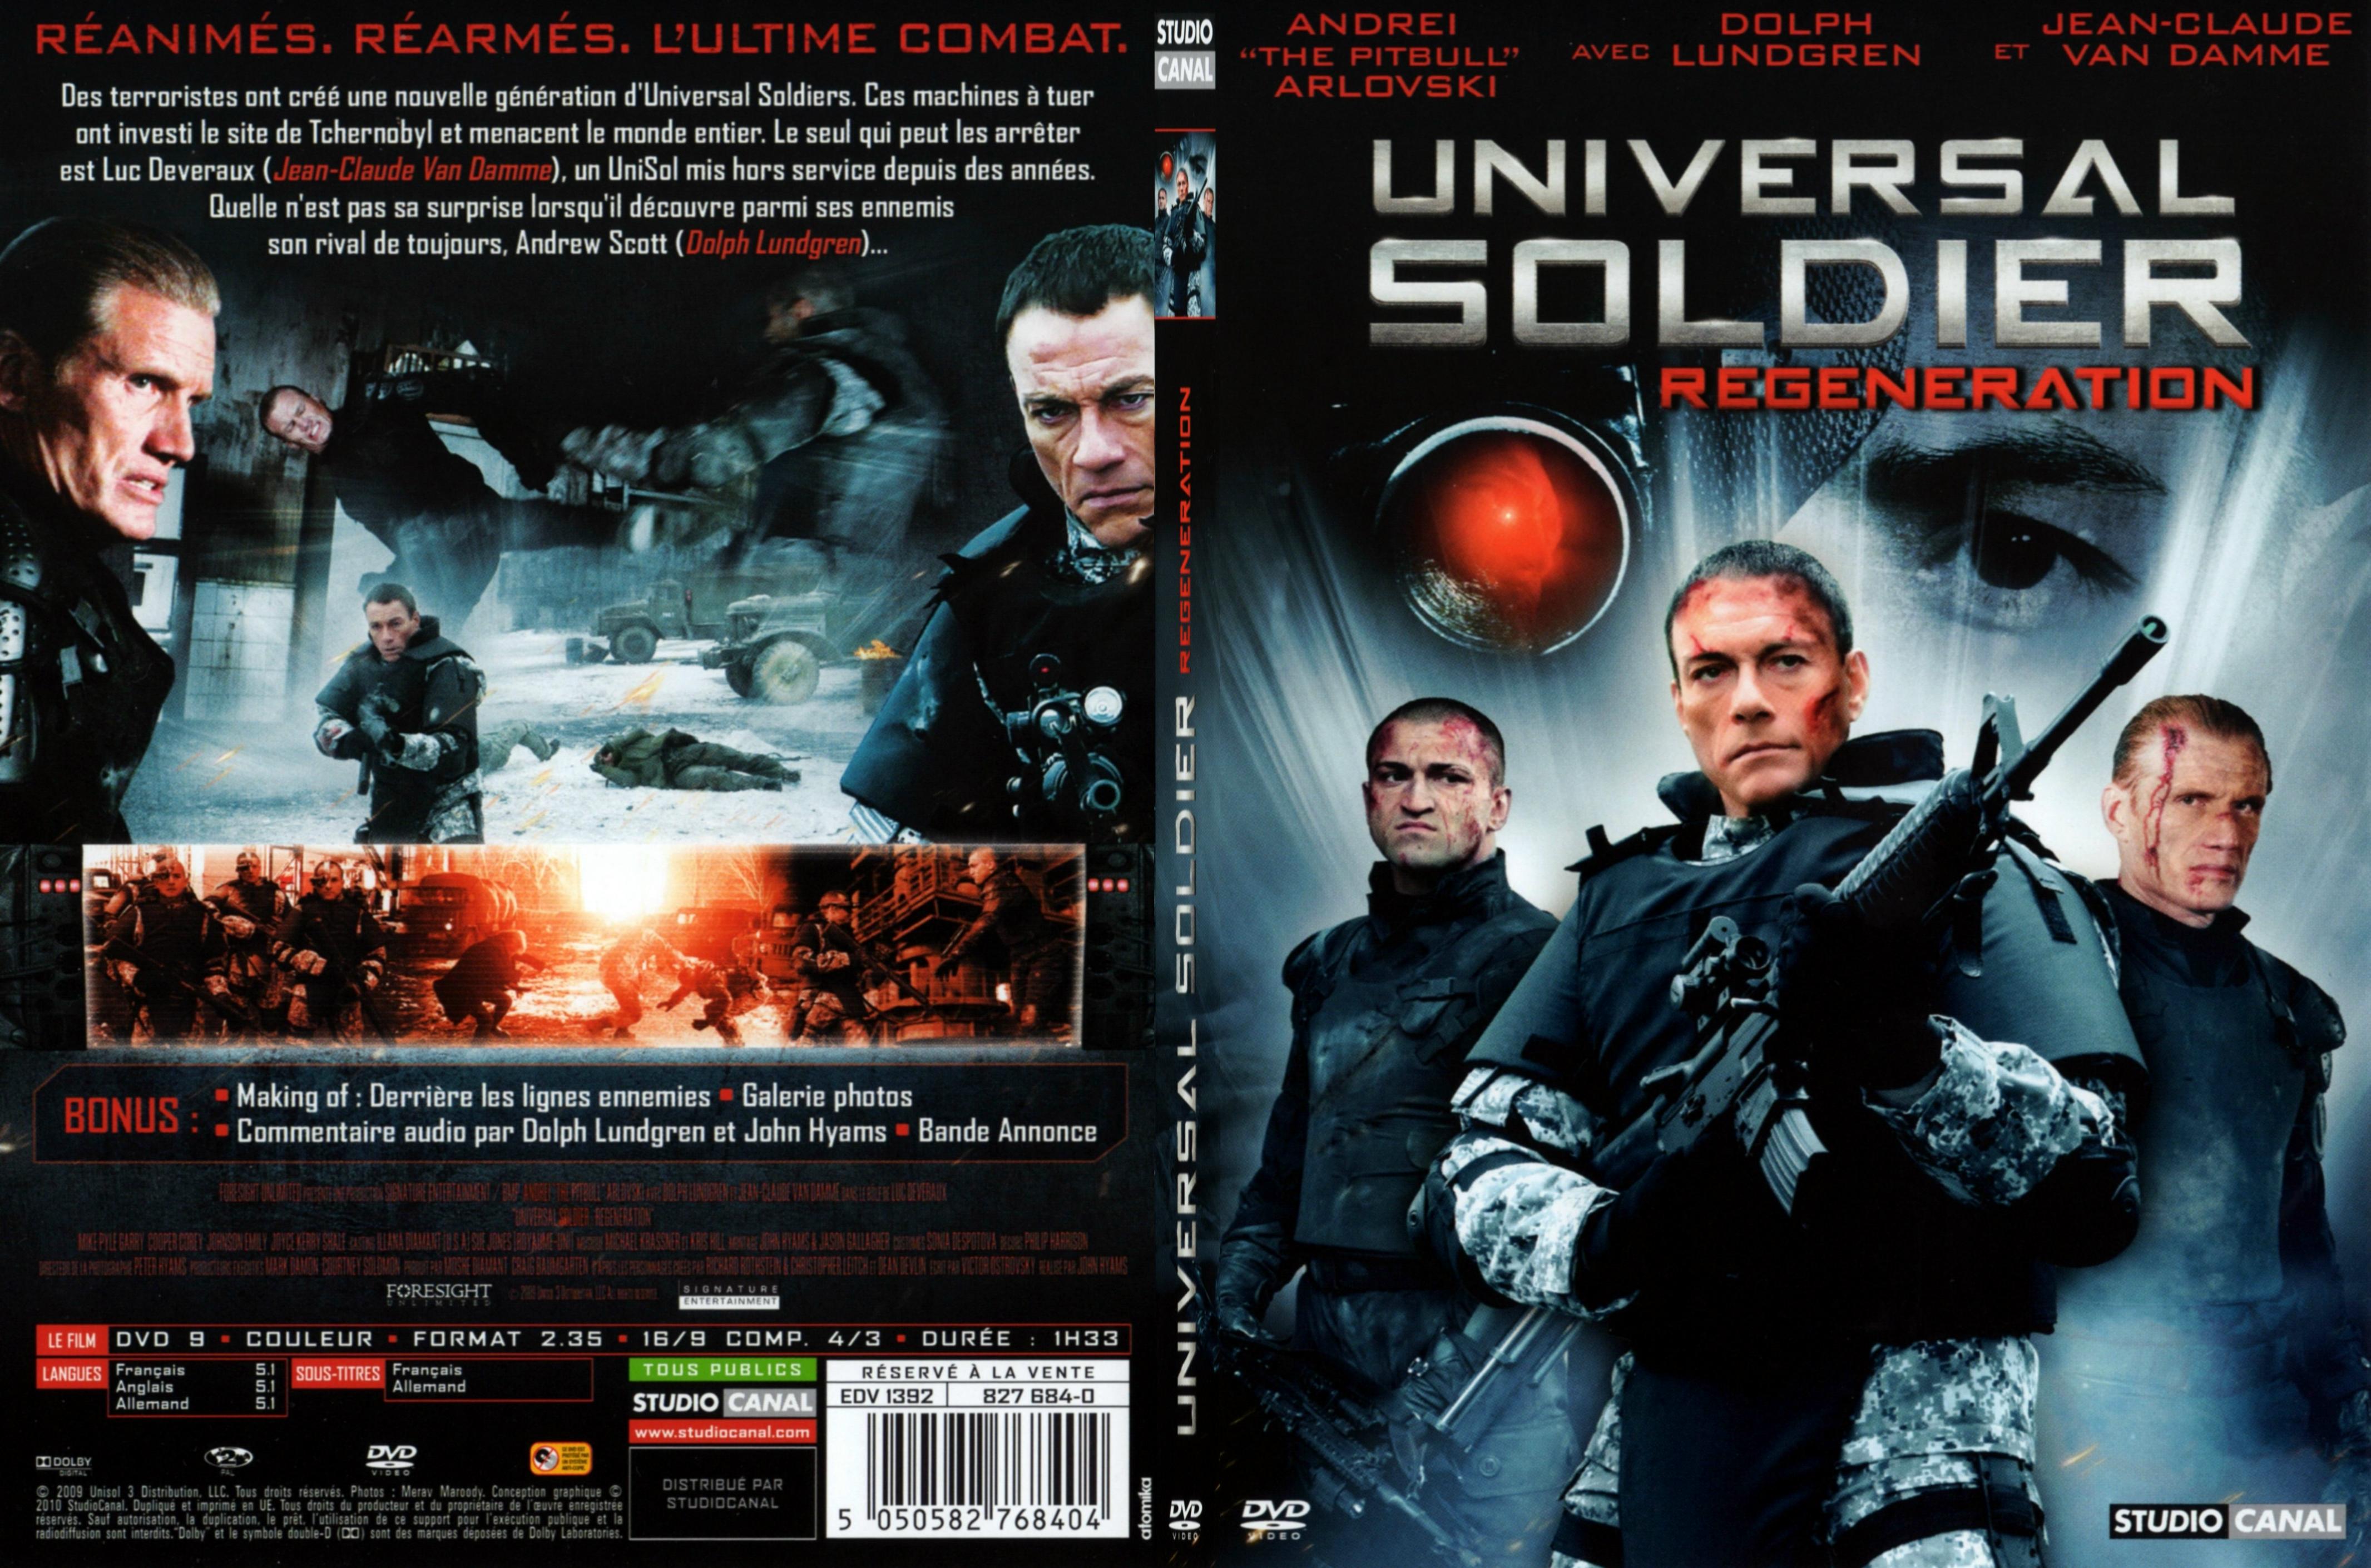 Jaquette DVD Universal soldier regeneration - SLIM